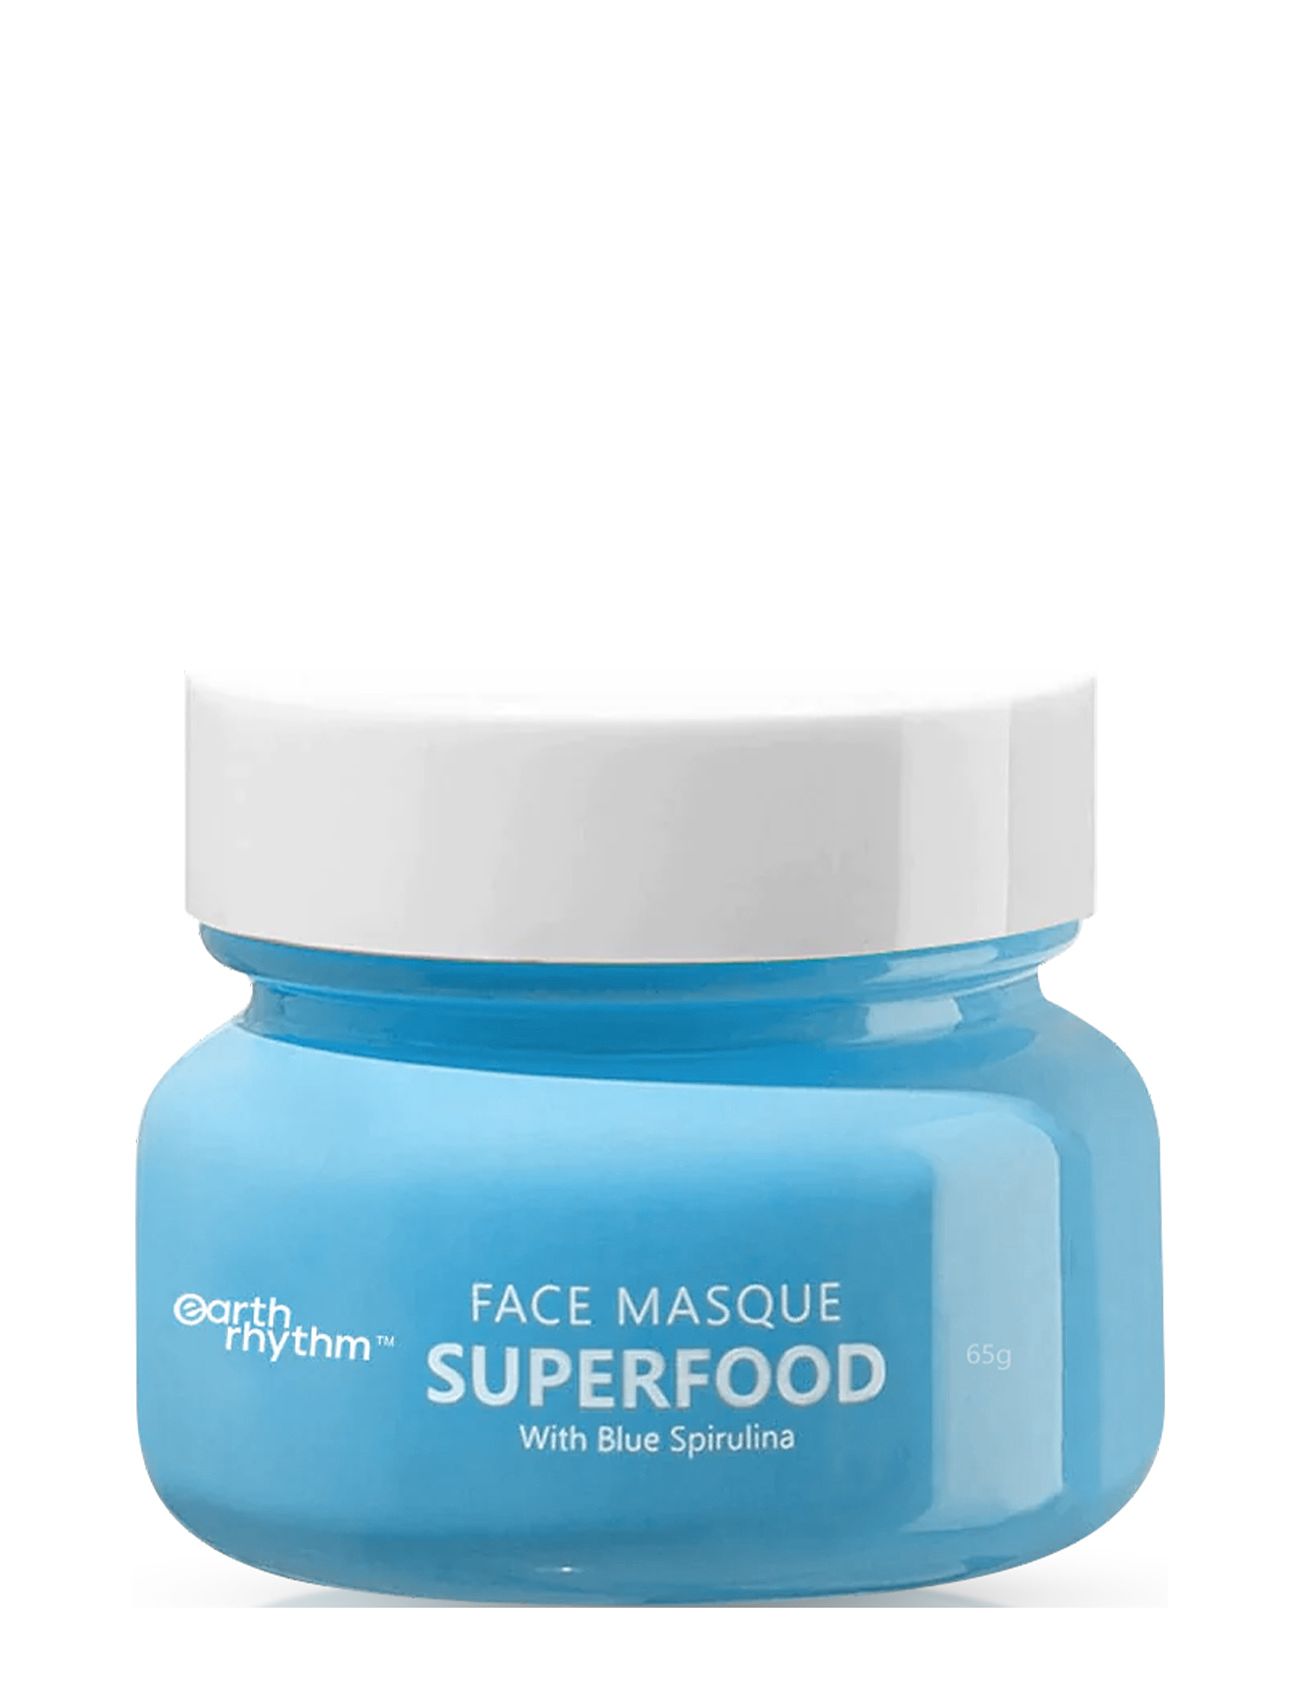 Superfood Face Masque With Blue Spirulina & Squalane Beauty Women Skin Care Face Face Masks Moisturizing Mask Blue Earth Rhythm